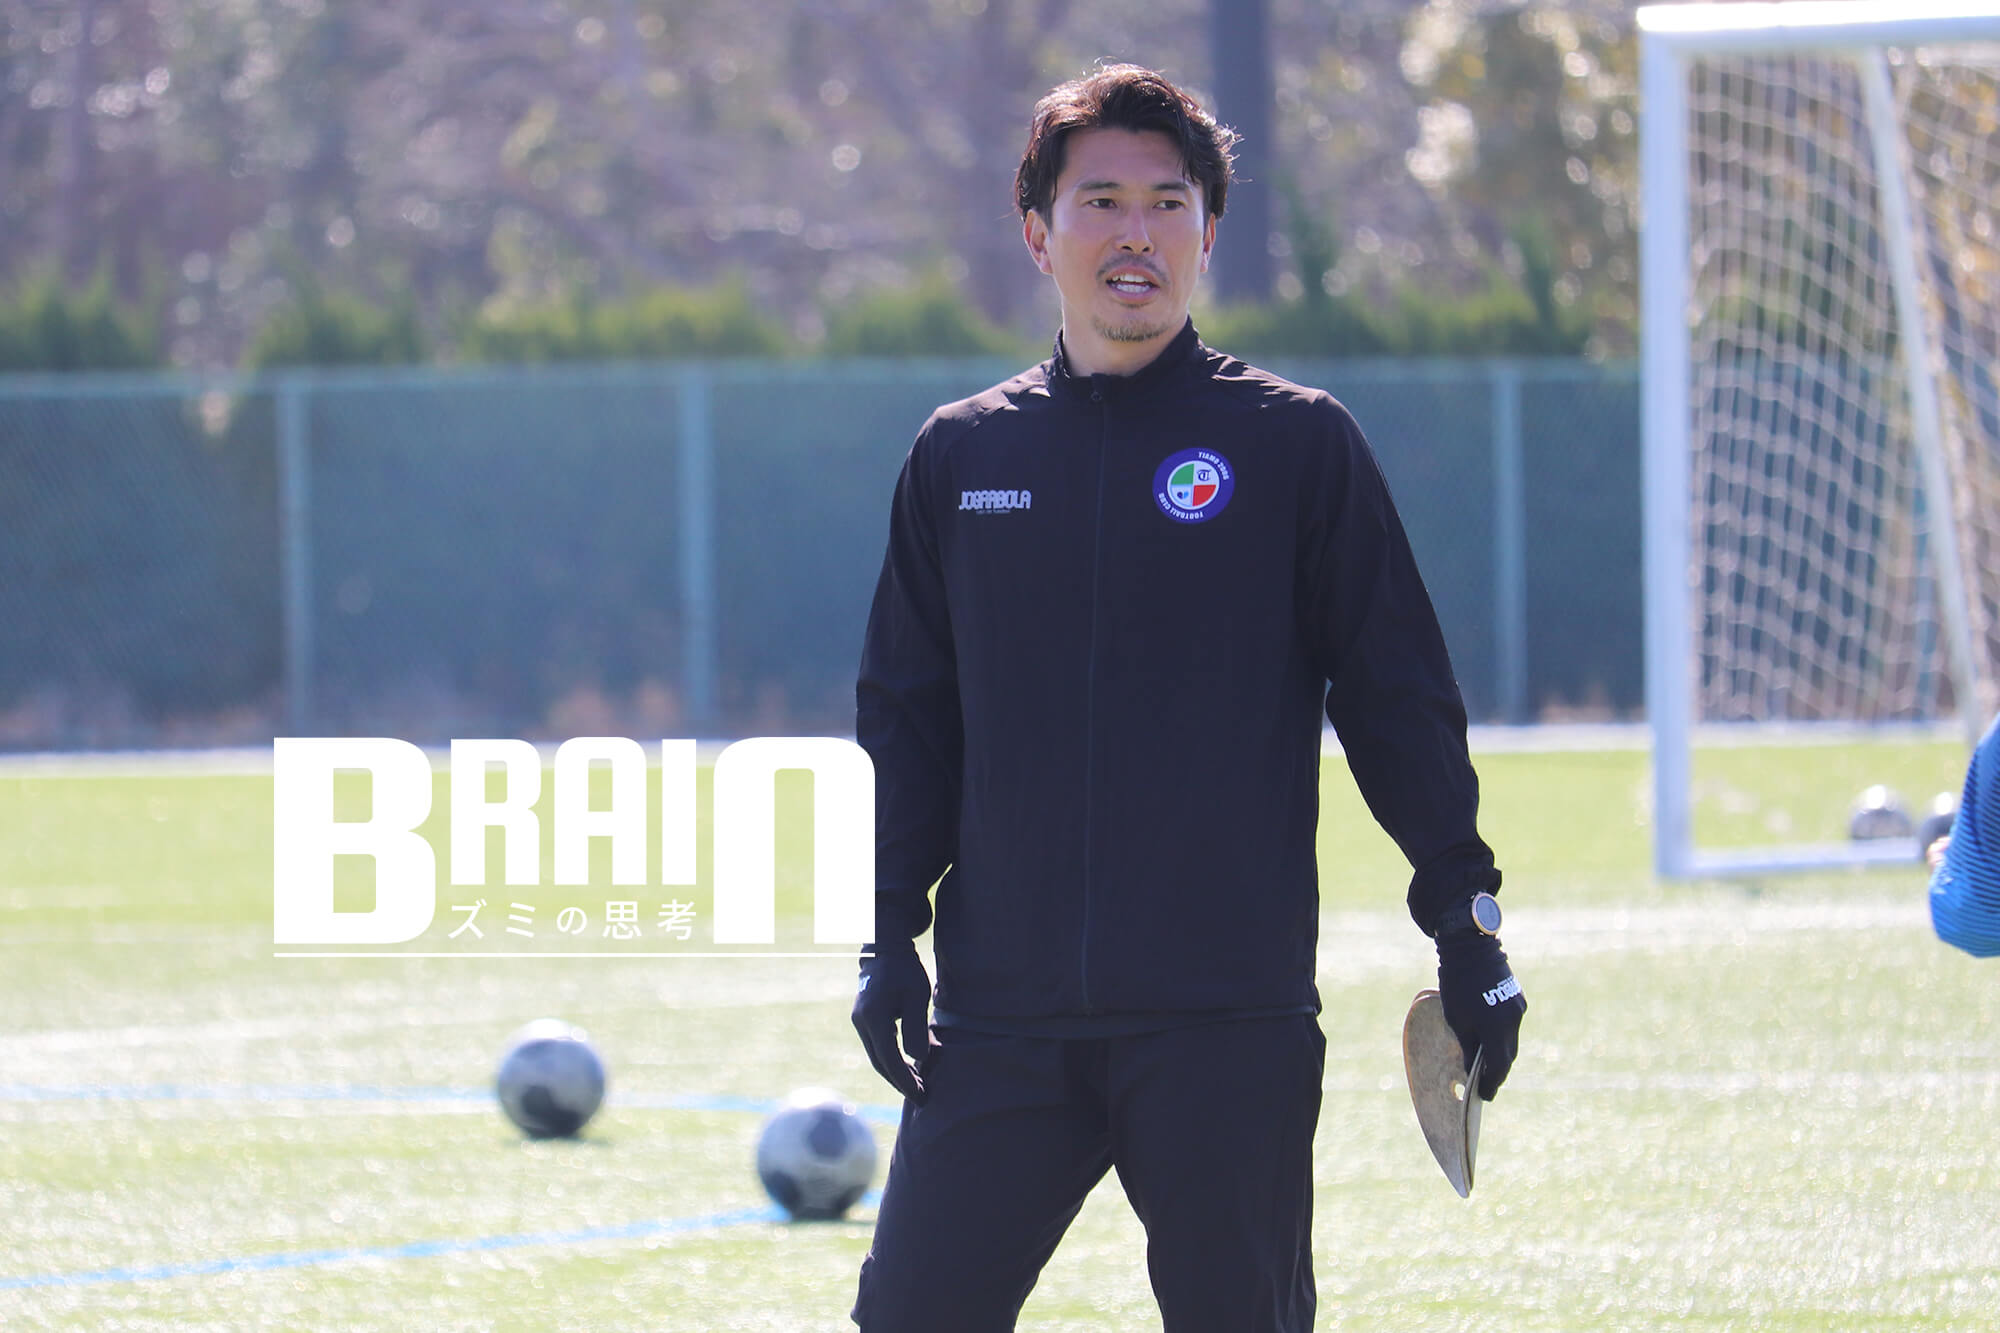 Vol 19 ポジショニングの重要性 小川佳純 Reibola 新しいサッカーメディア